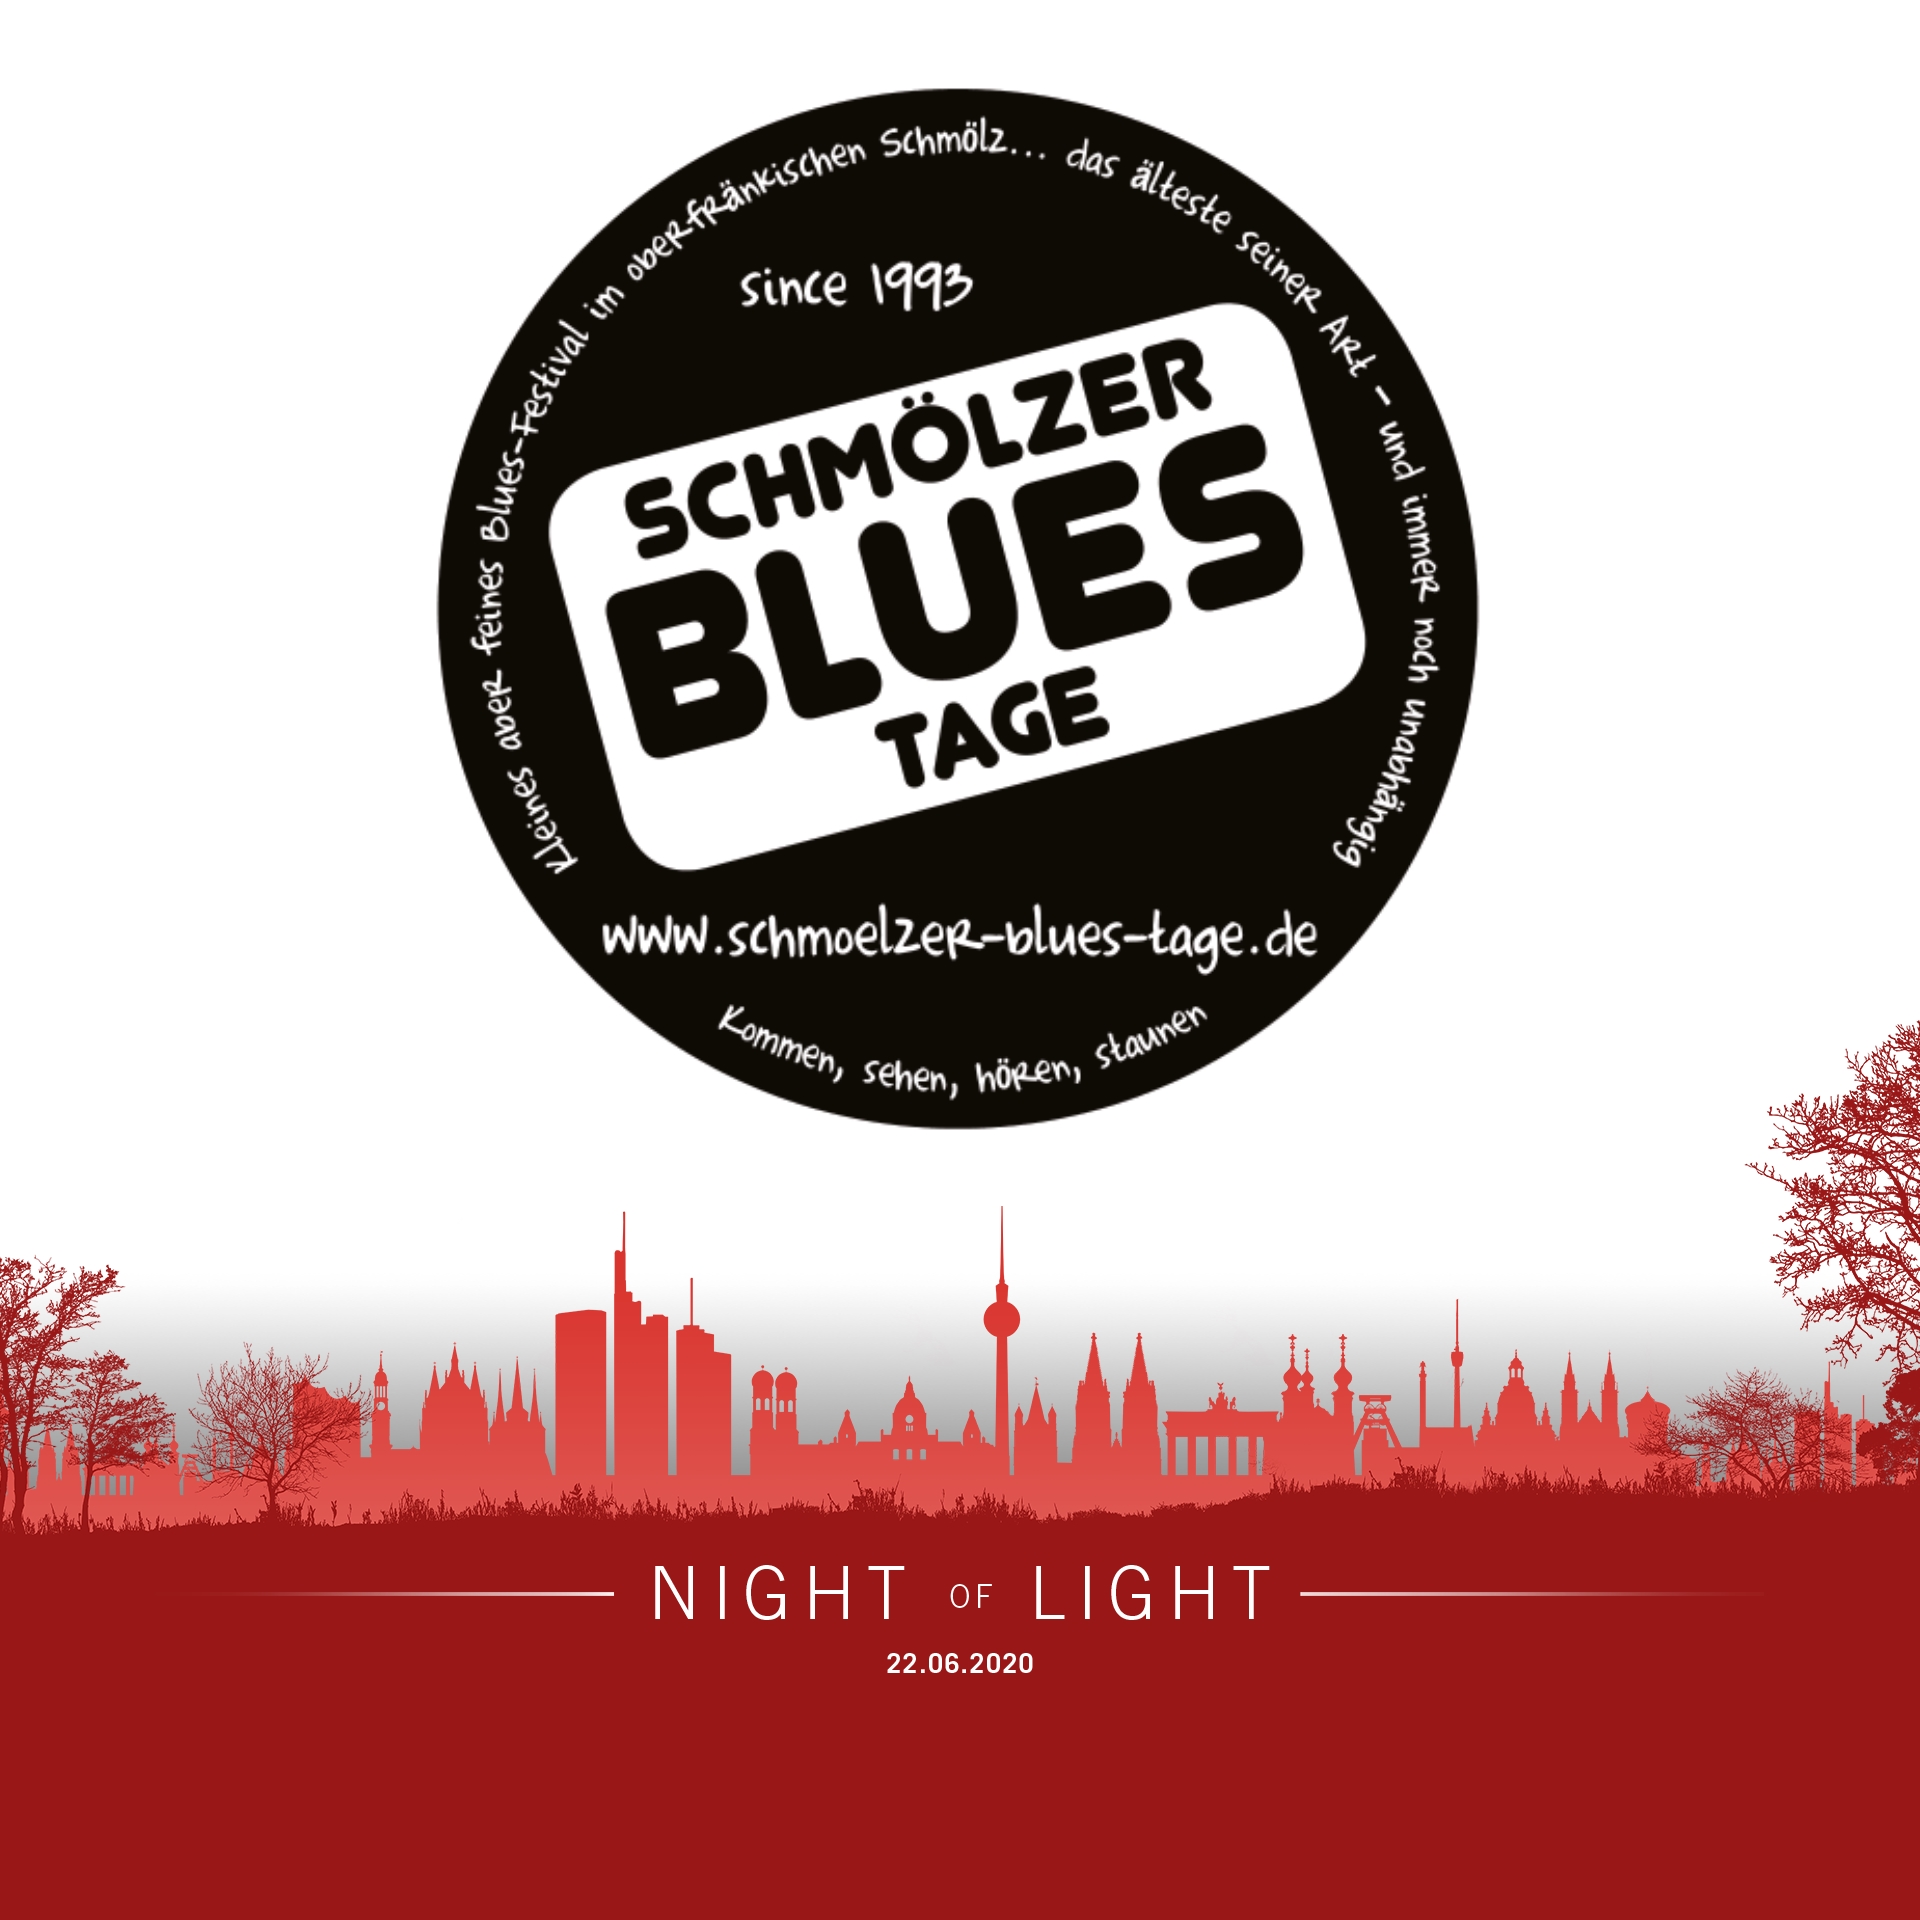 NoL Schmlzer Blues Tage